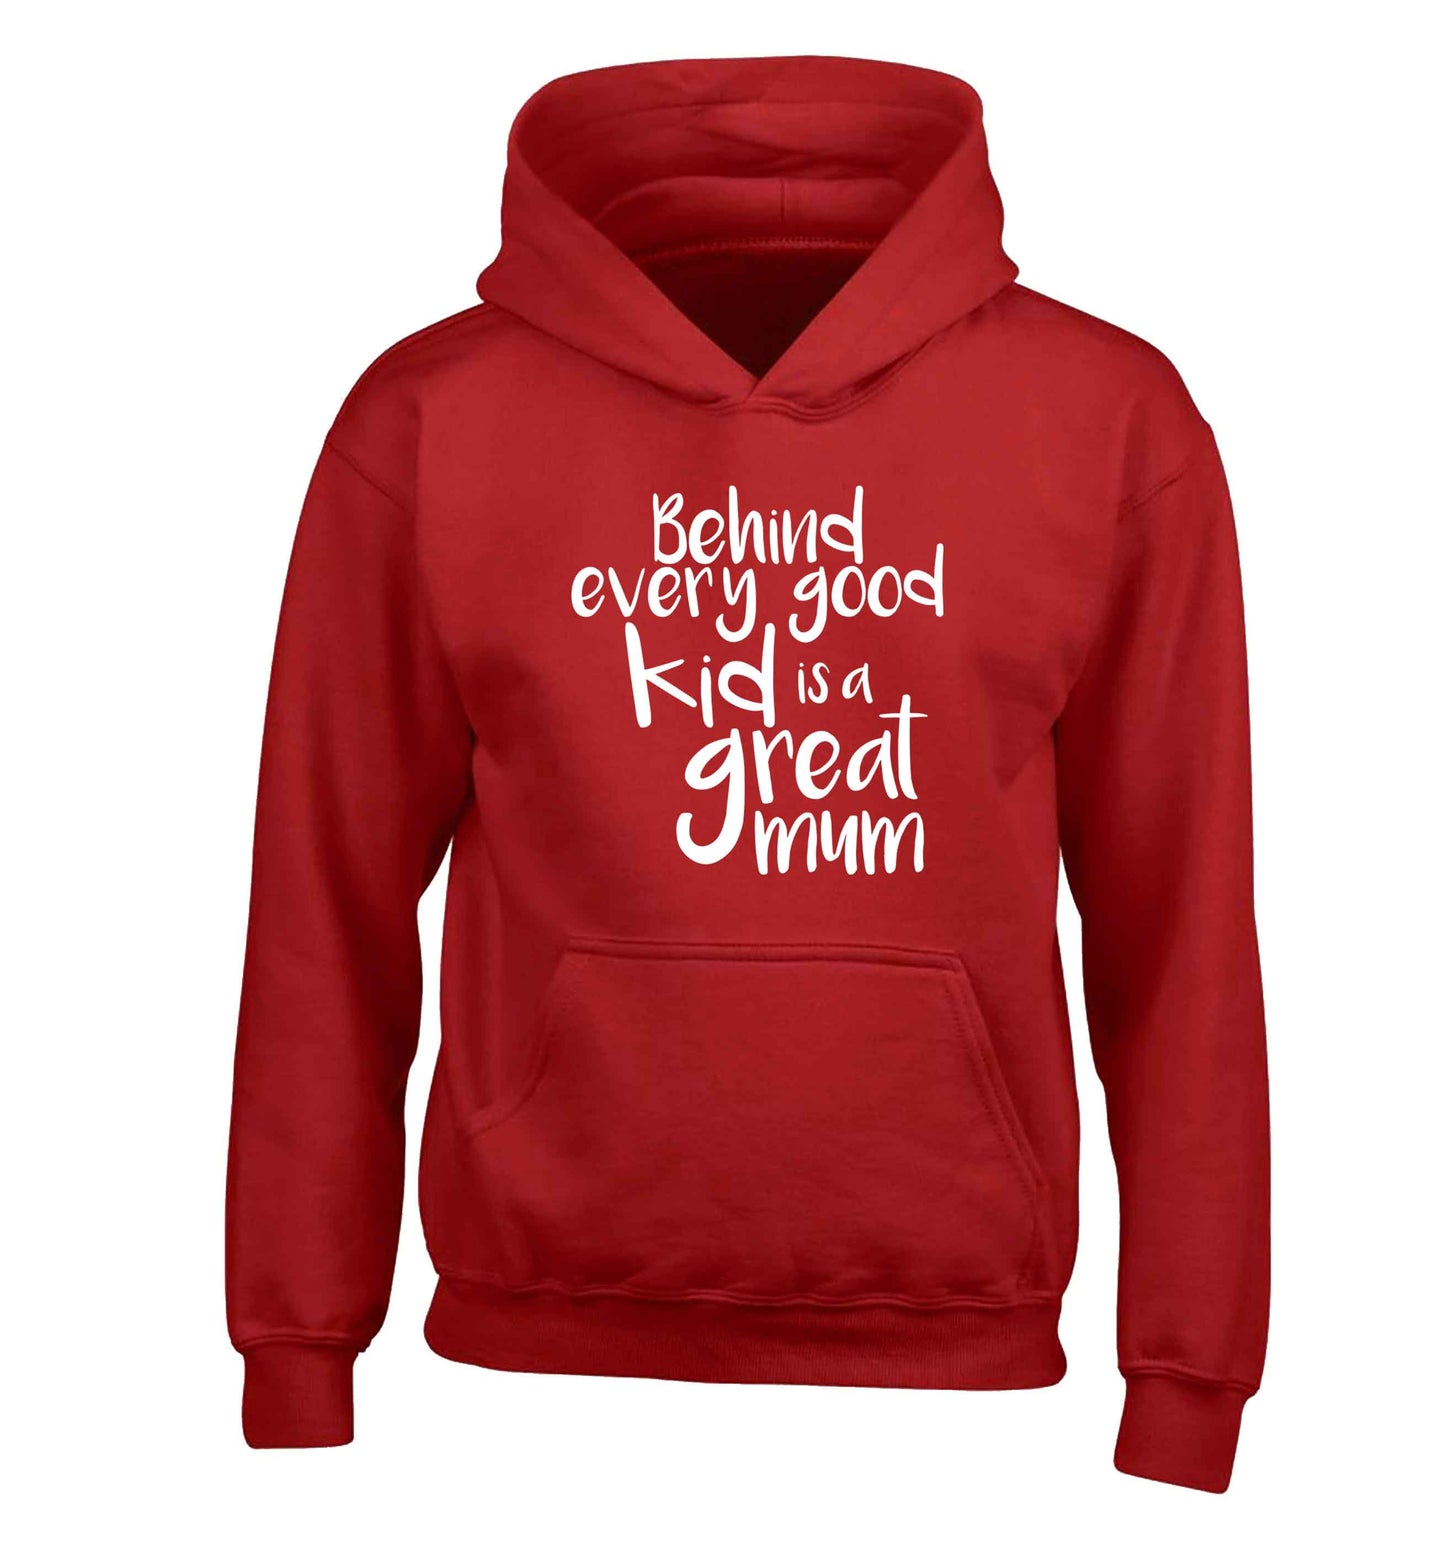 Behind every good kid is a great mum children's red hoodie 12-13 Years